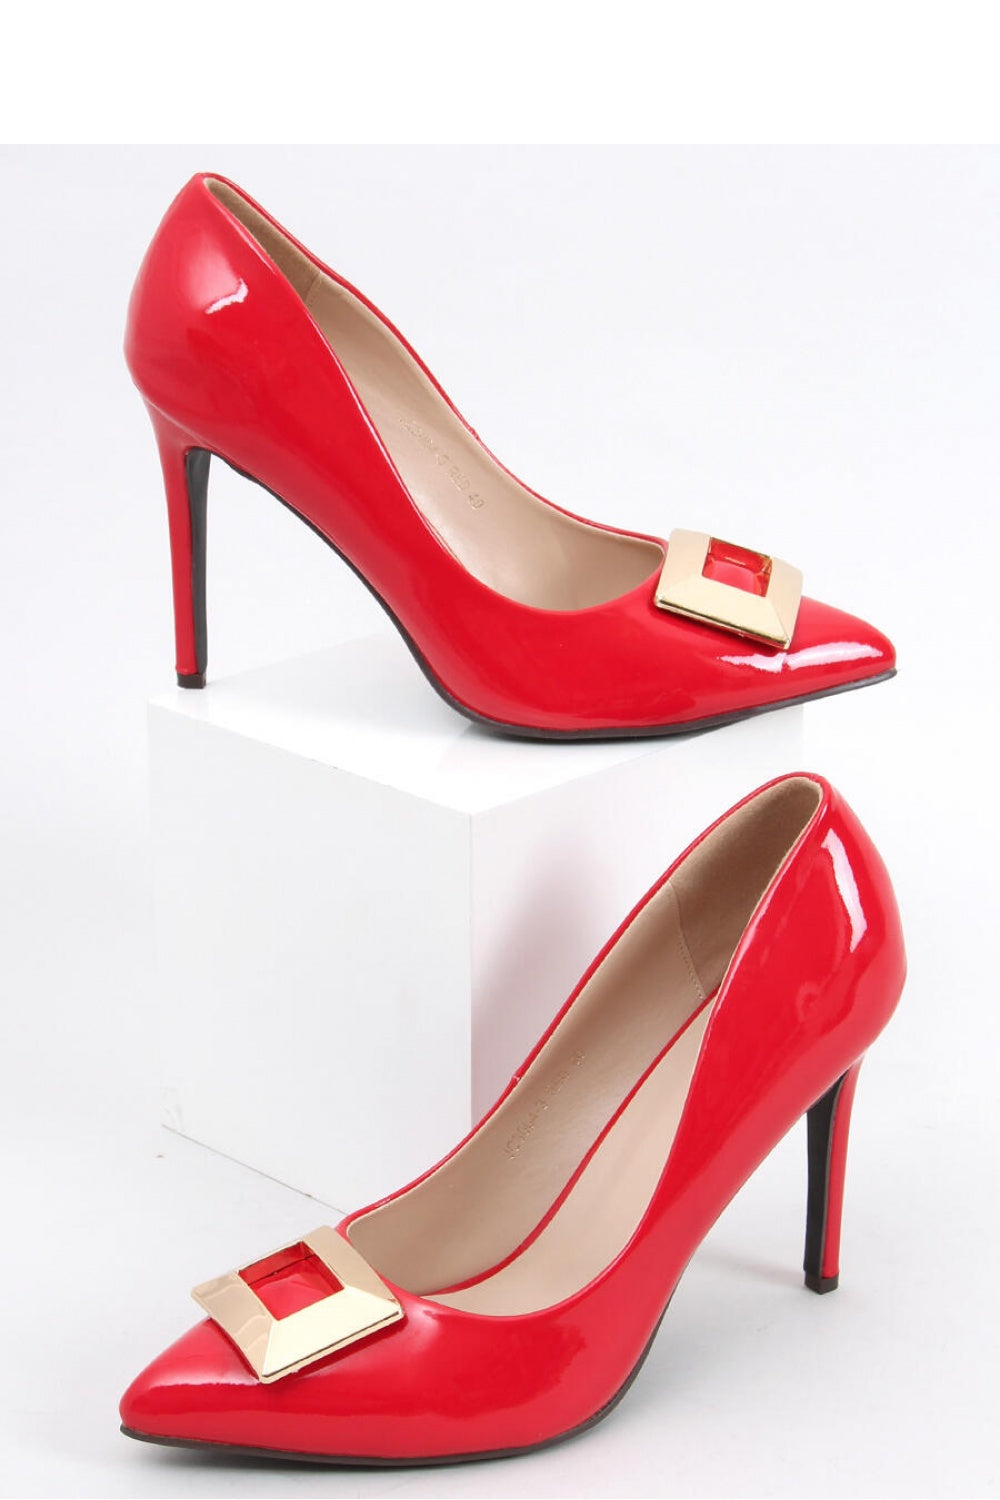 High heels model 166540 Inello Posh Styles Apparel